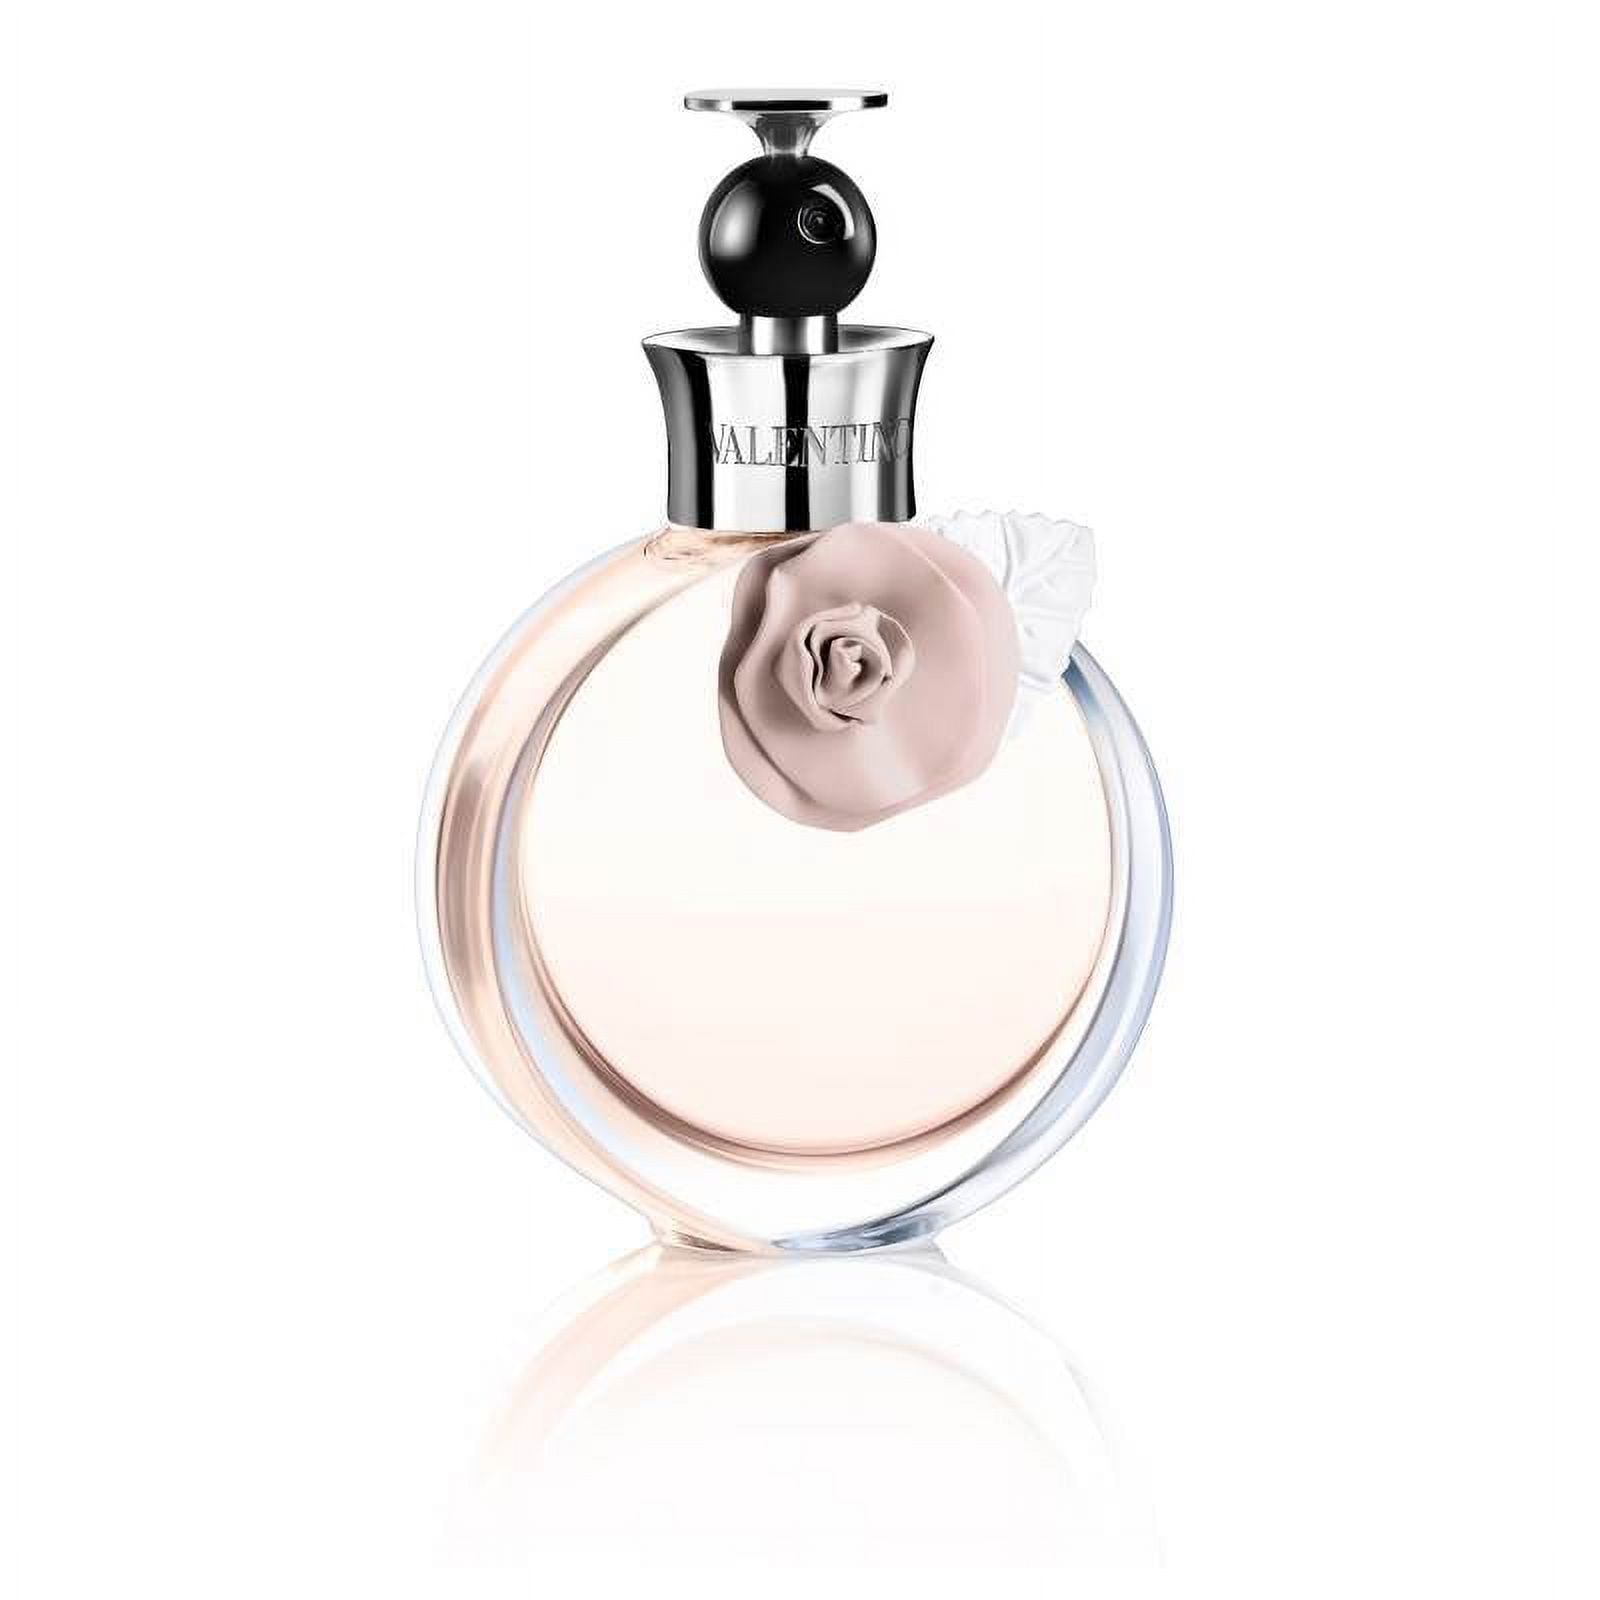 Valentino Valentina Eau de Parfum Perfume for Women, 1 Oz Mini & Travel Size